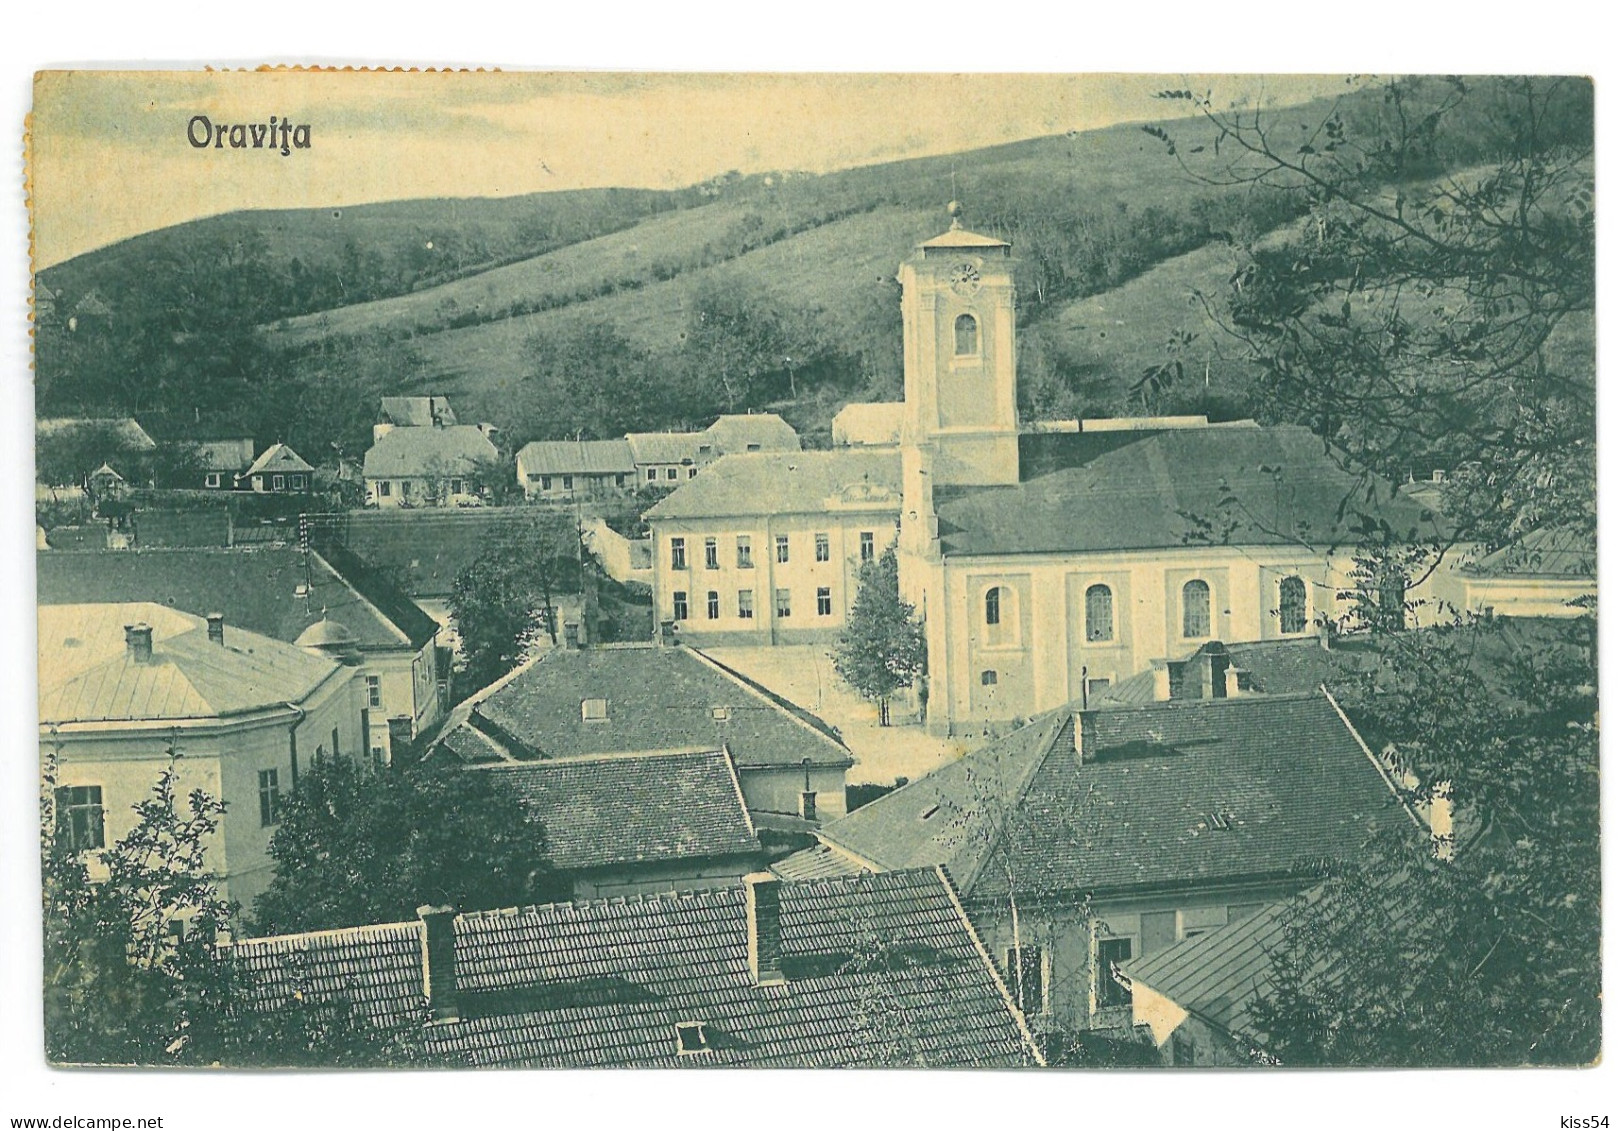 RO 45 - 20632 ORAVITA, Caras-Severin, Romania - Old Postcard - Used - 1923 - Romania